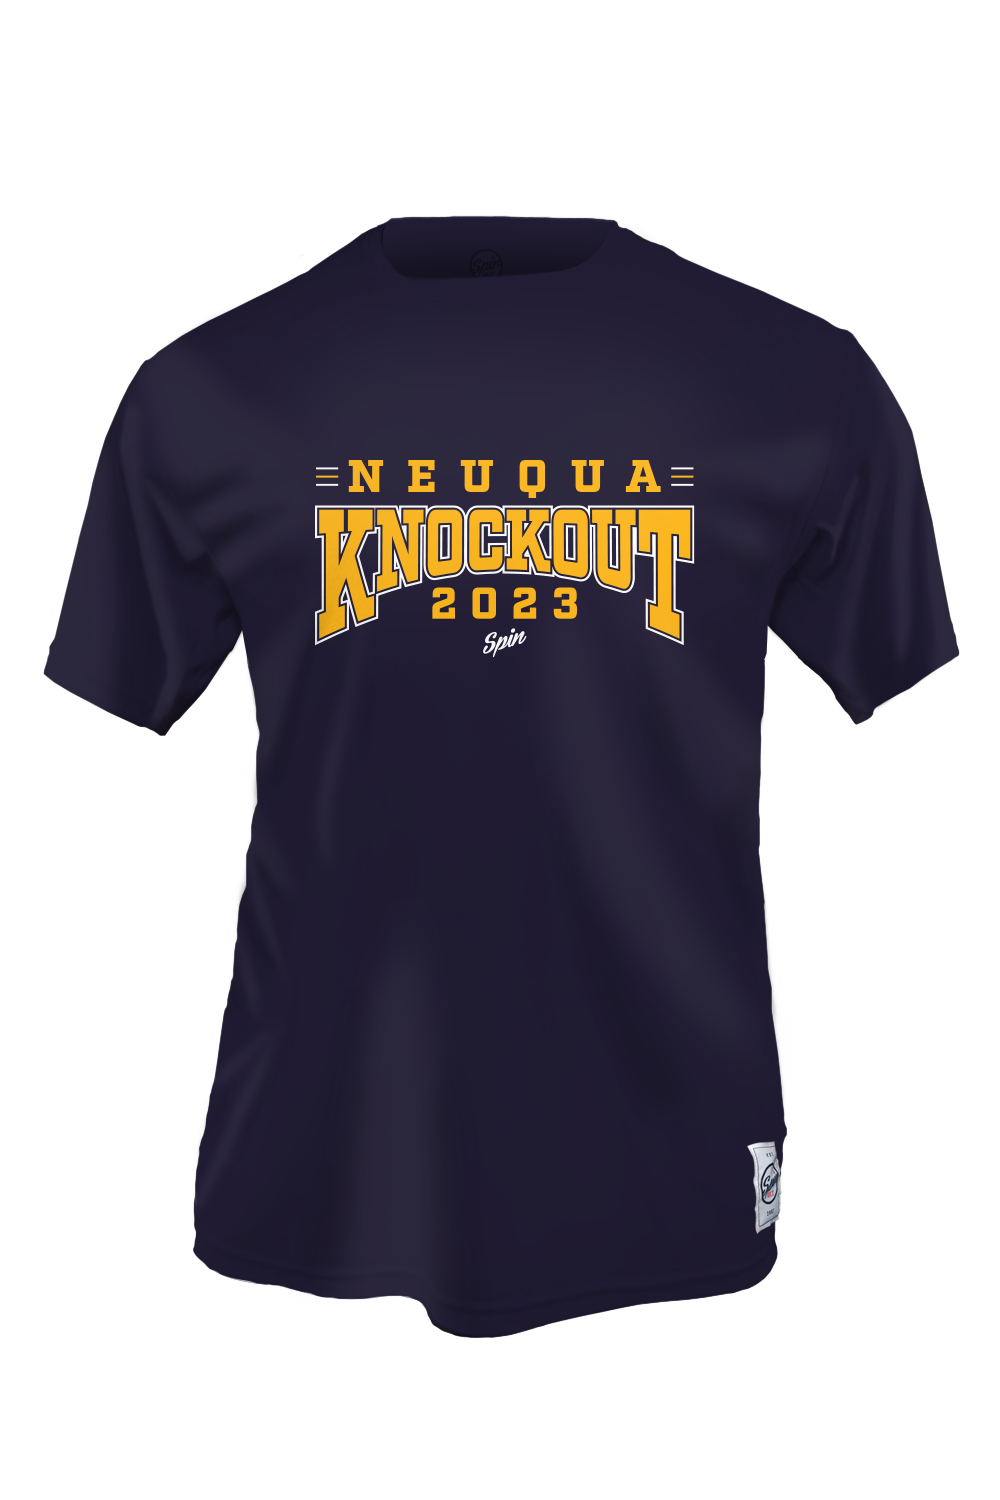 Neuqua Knockout 2023 Classic Short Sleeve